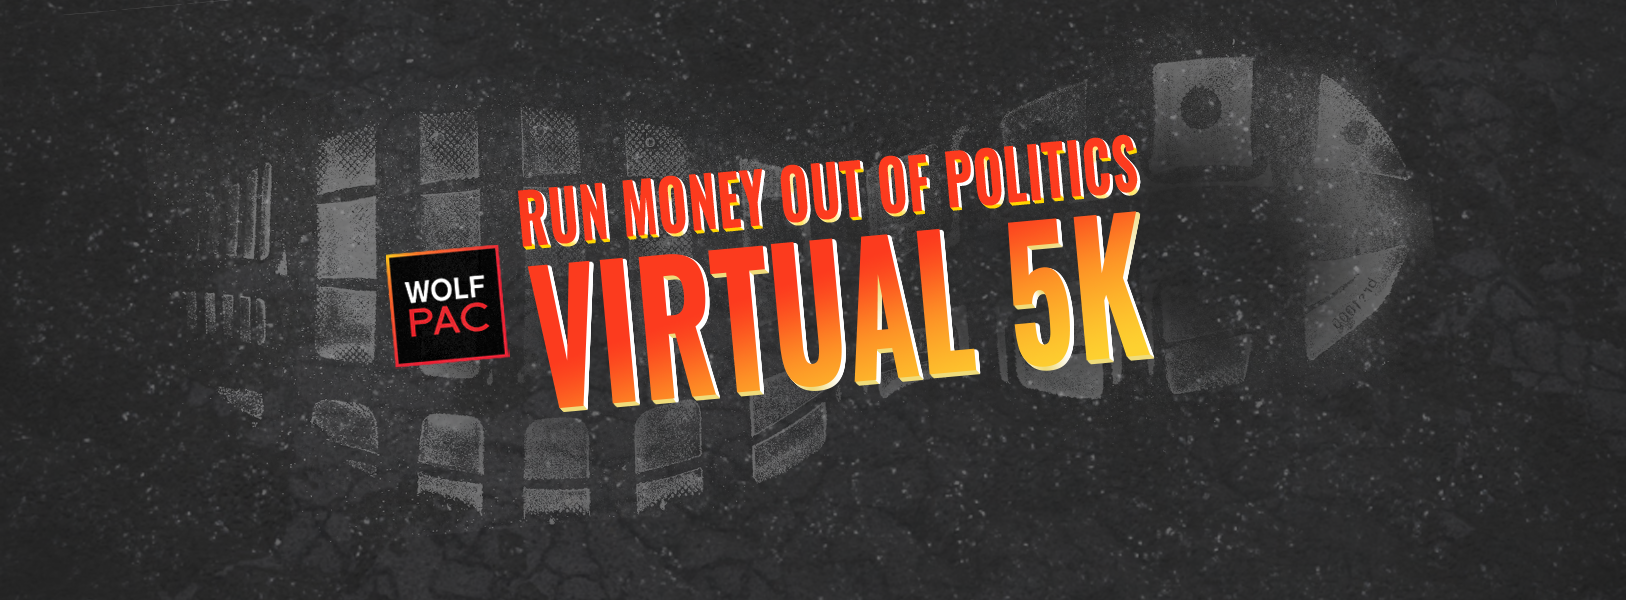 Run money out of politics - virtual 5k